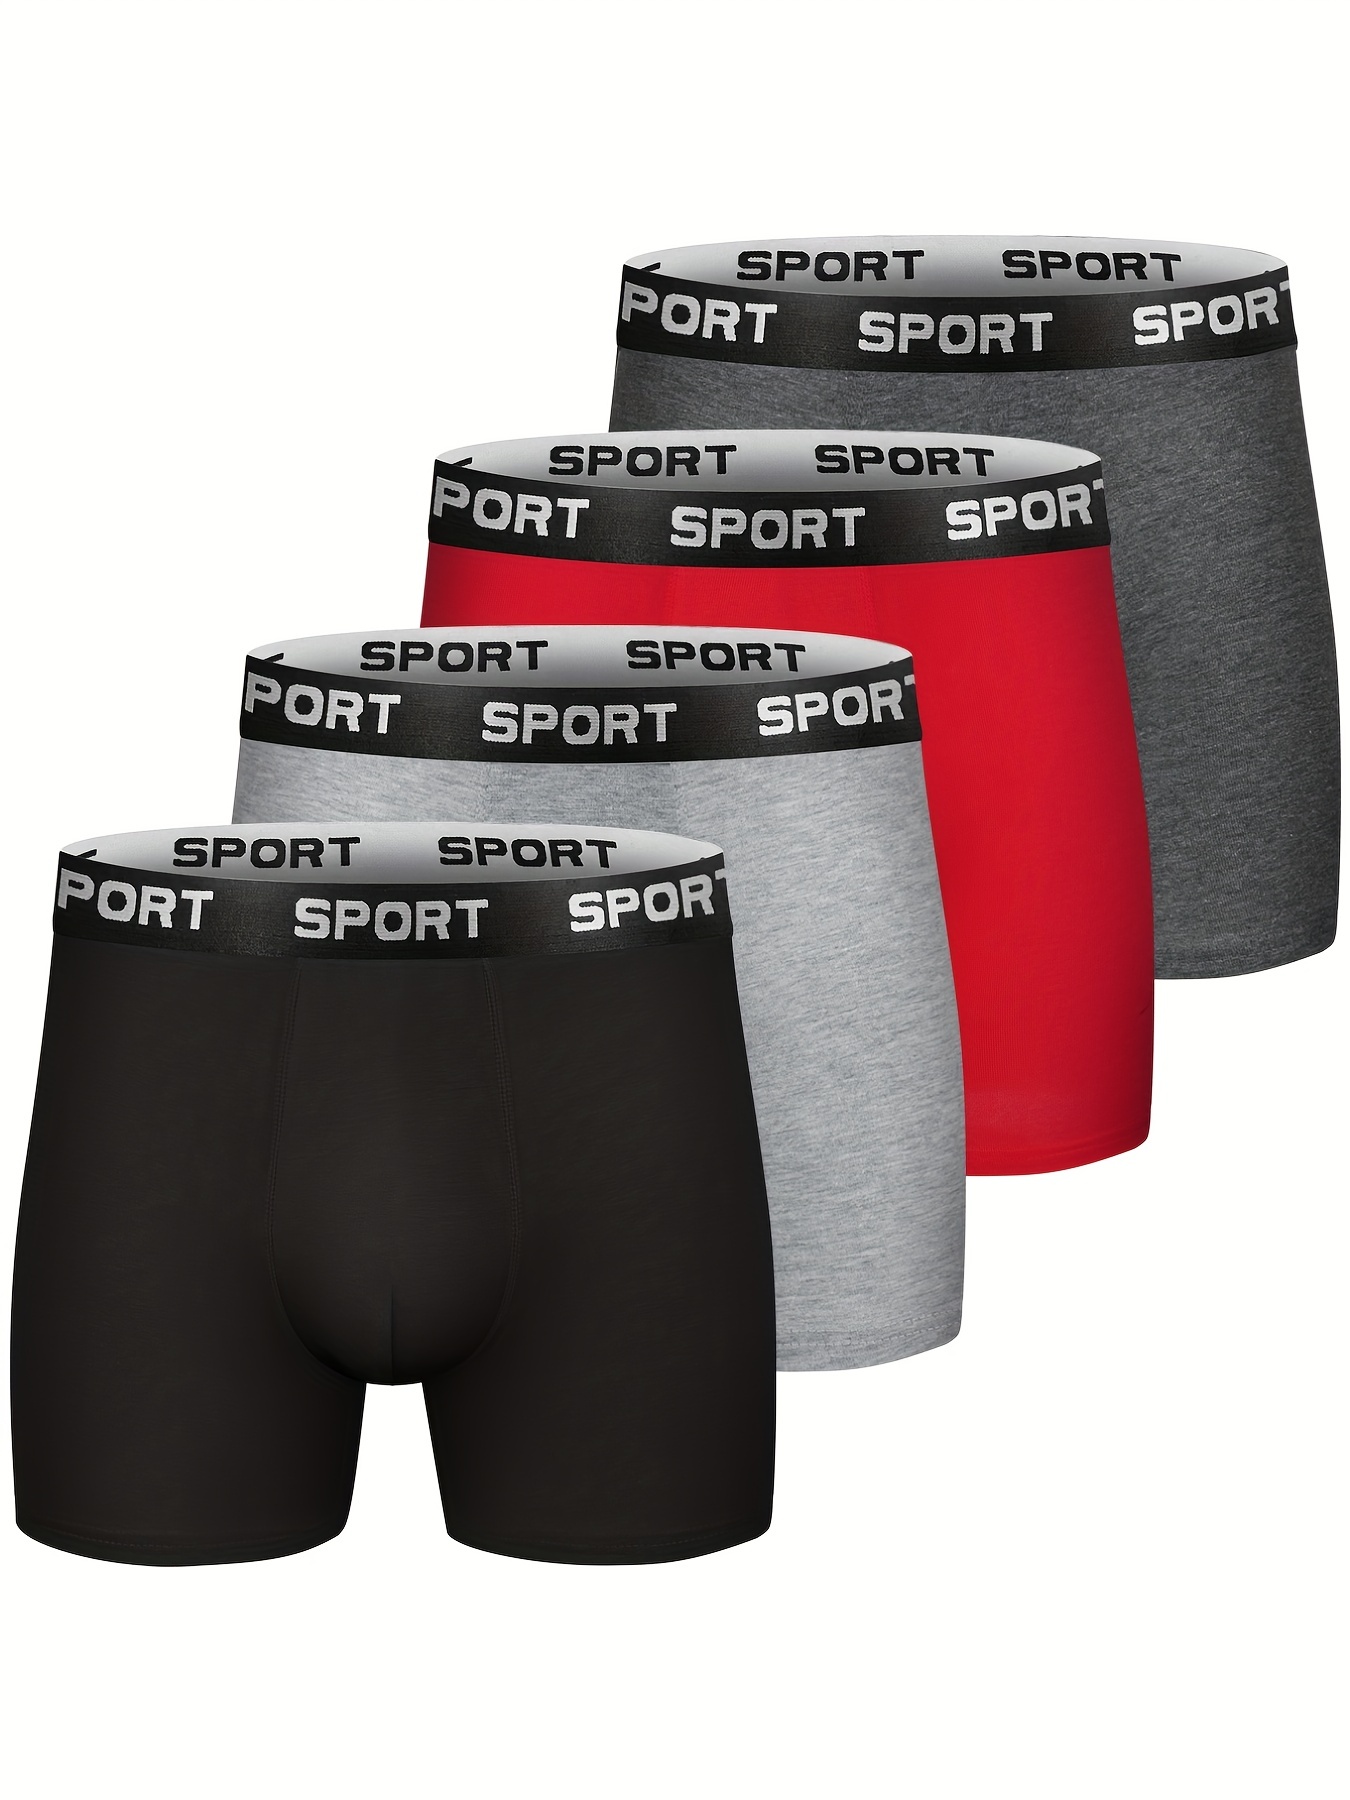 Men's Underwear Soft Cotton Print Boxers Loose and Comfortable Arrow Pants